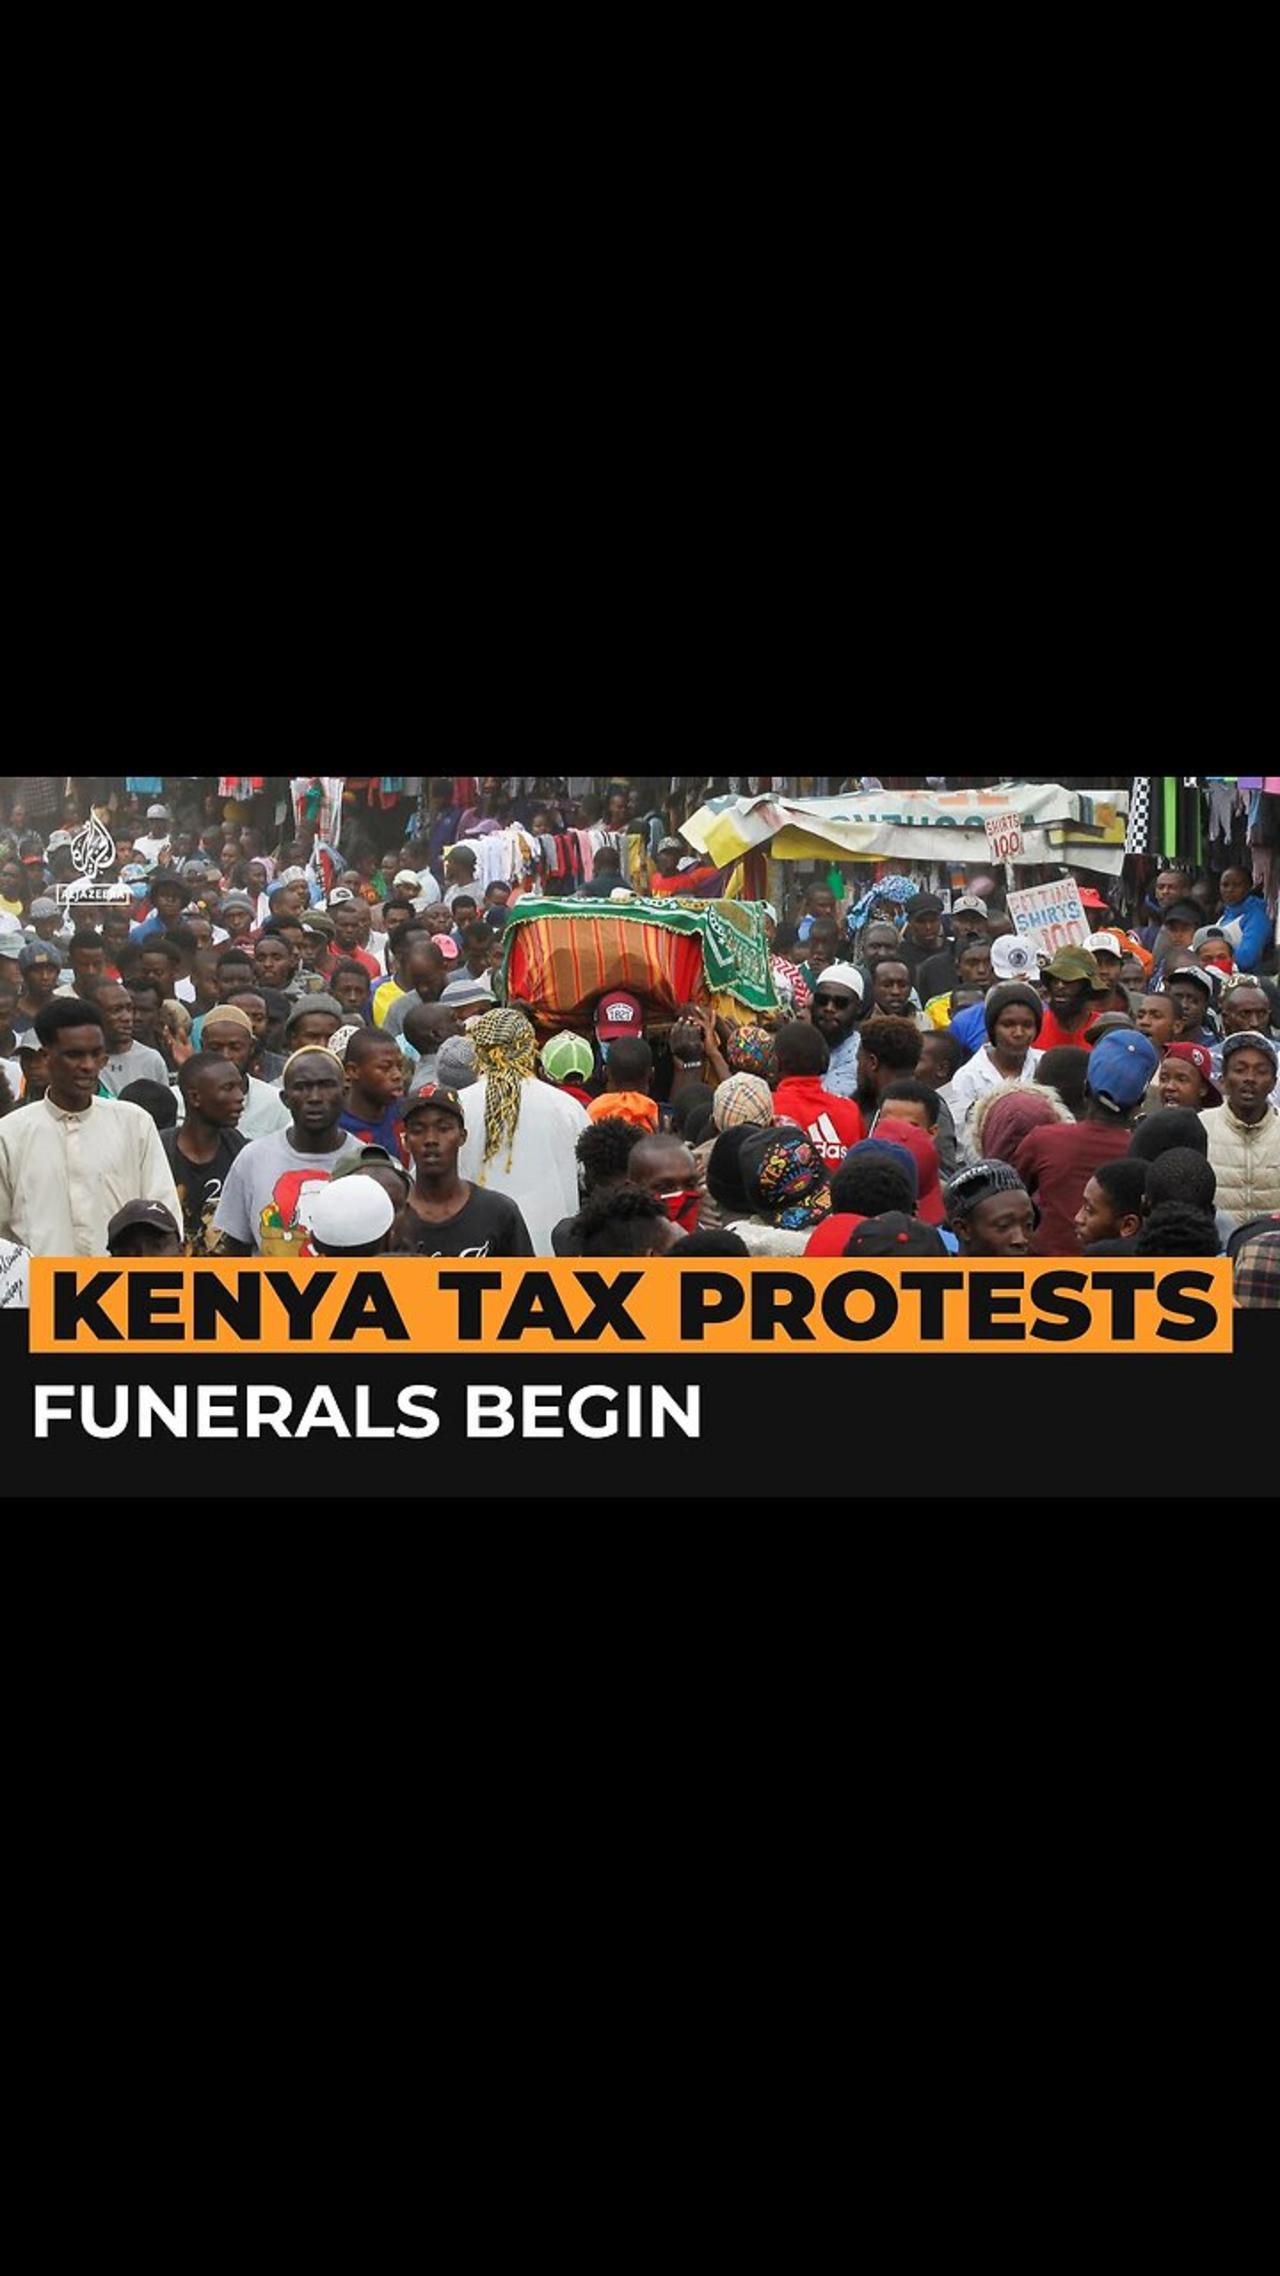 Funerals begin for demonstrators as protests continue in Kenya | Al Jazeera Newsfeed